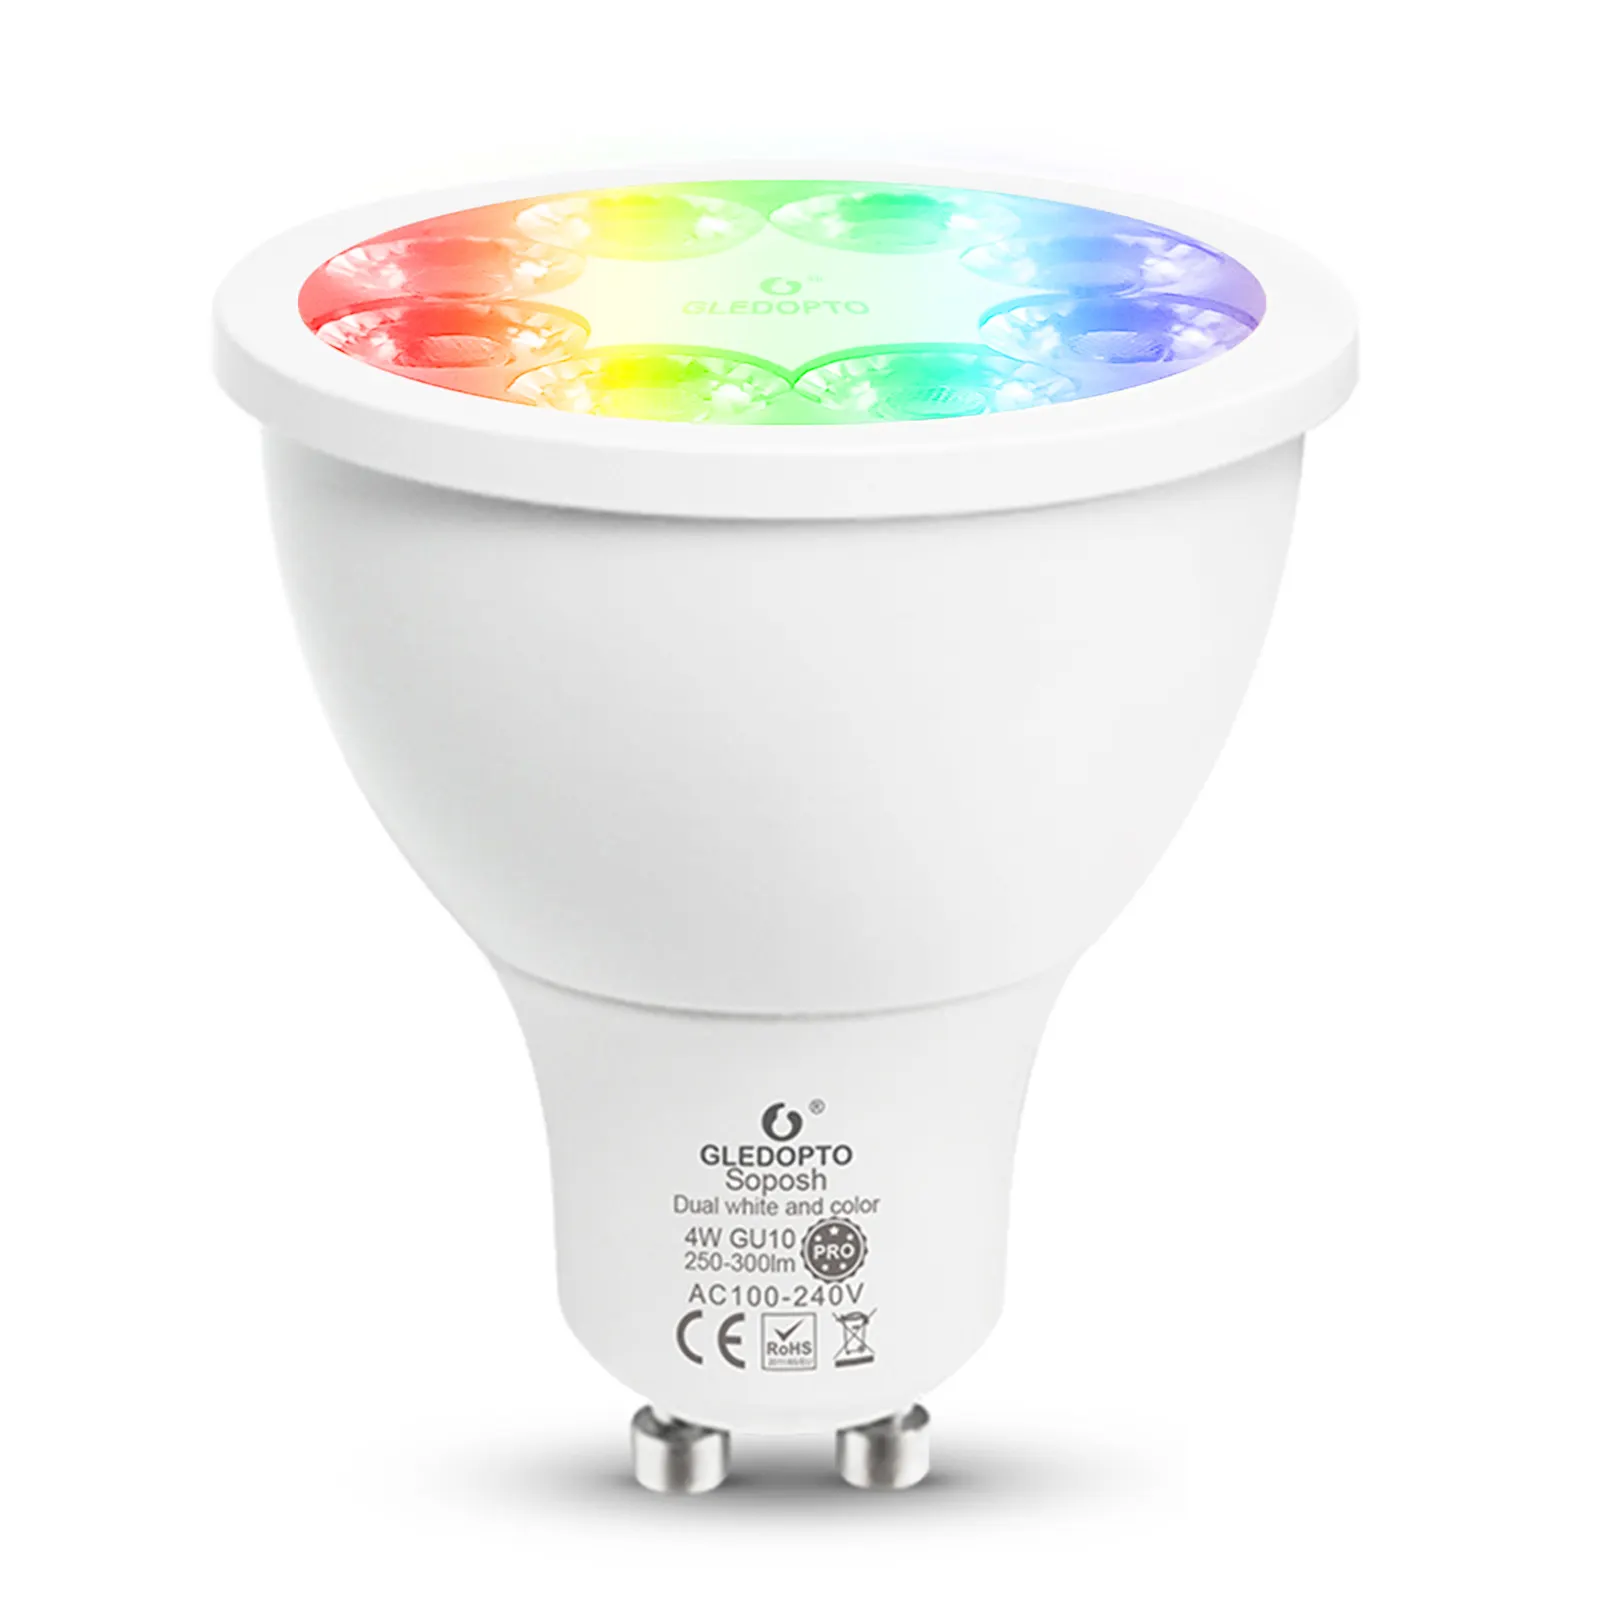 Gu10 Led Bulb Gledopto Zig Bee Smart Phone App Control RGB CCT Led Light Bulb GU10 With Amazon Alexa Voice Control 4W Bulb